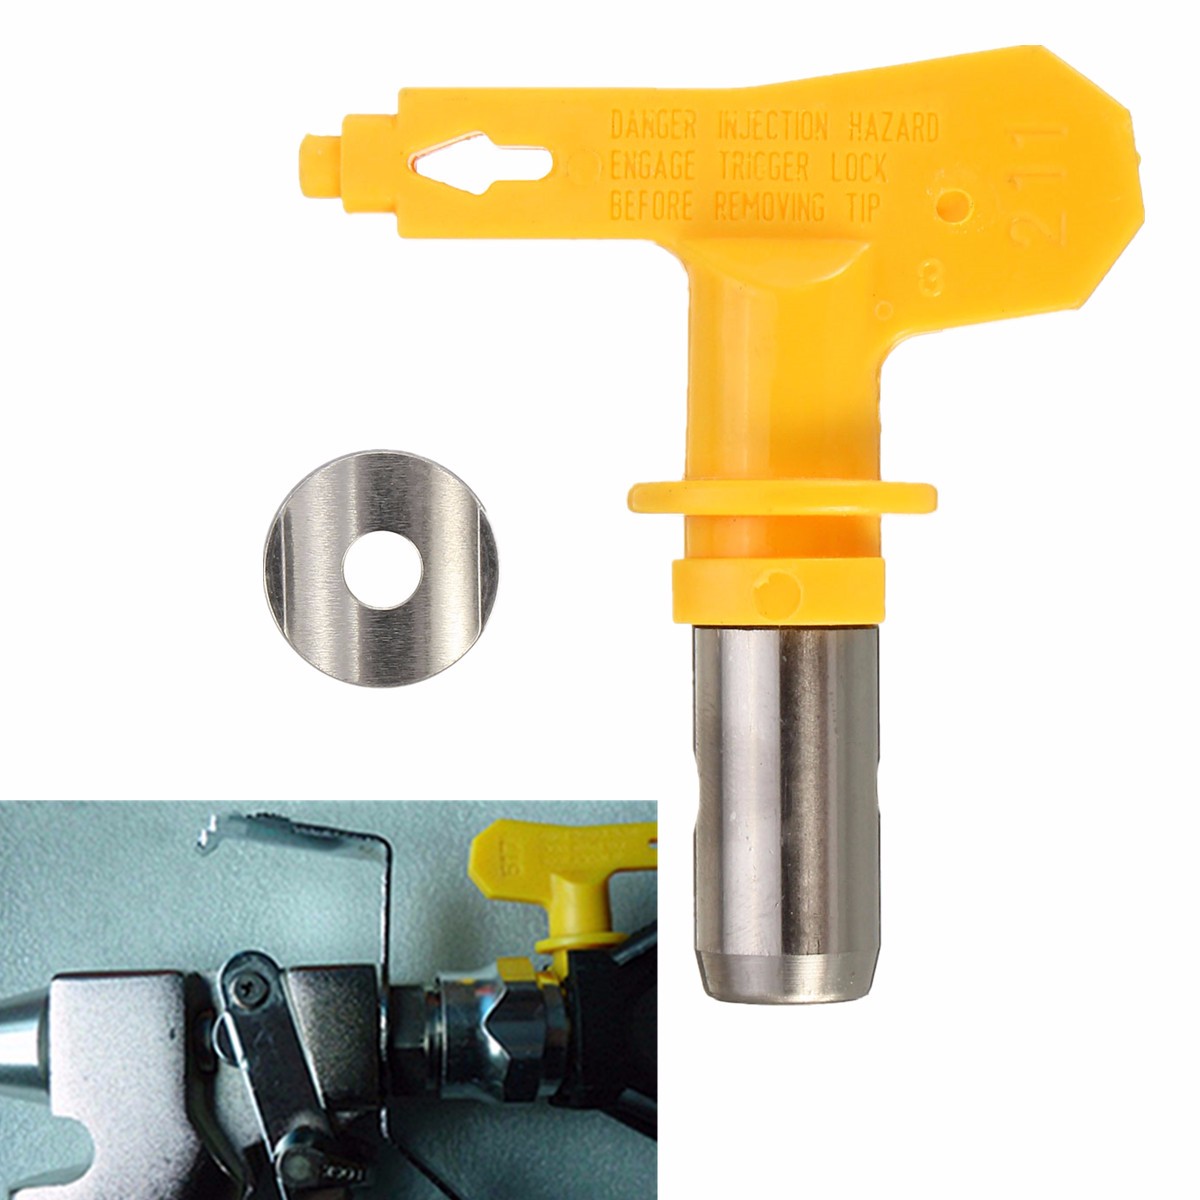 Airless-Spray-Tips-2345-Series-for-Wagner-Titan-Graco-Gun-Paint-Sprayer-Spraying-Gun-Accessories-1101870-5